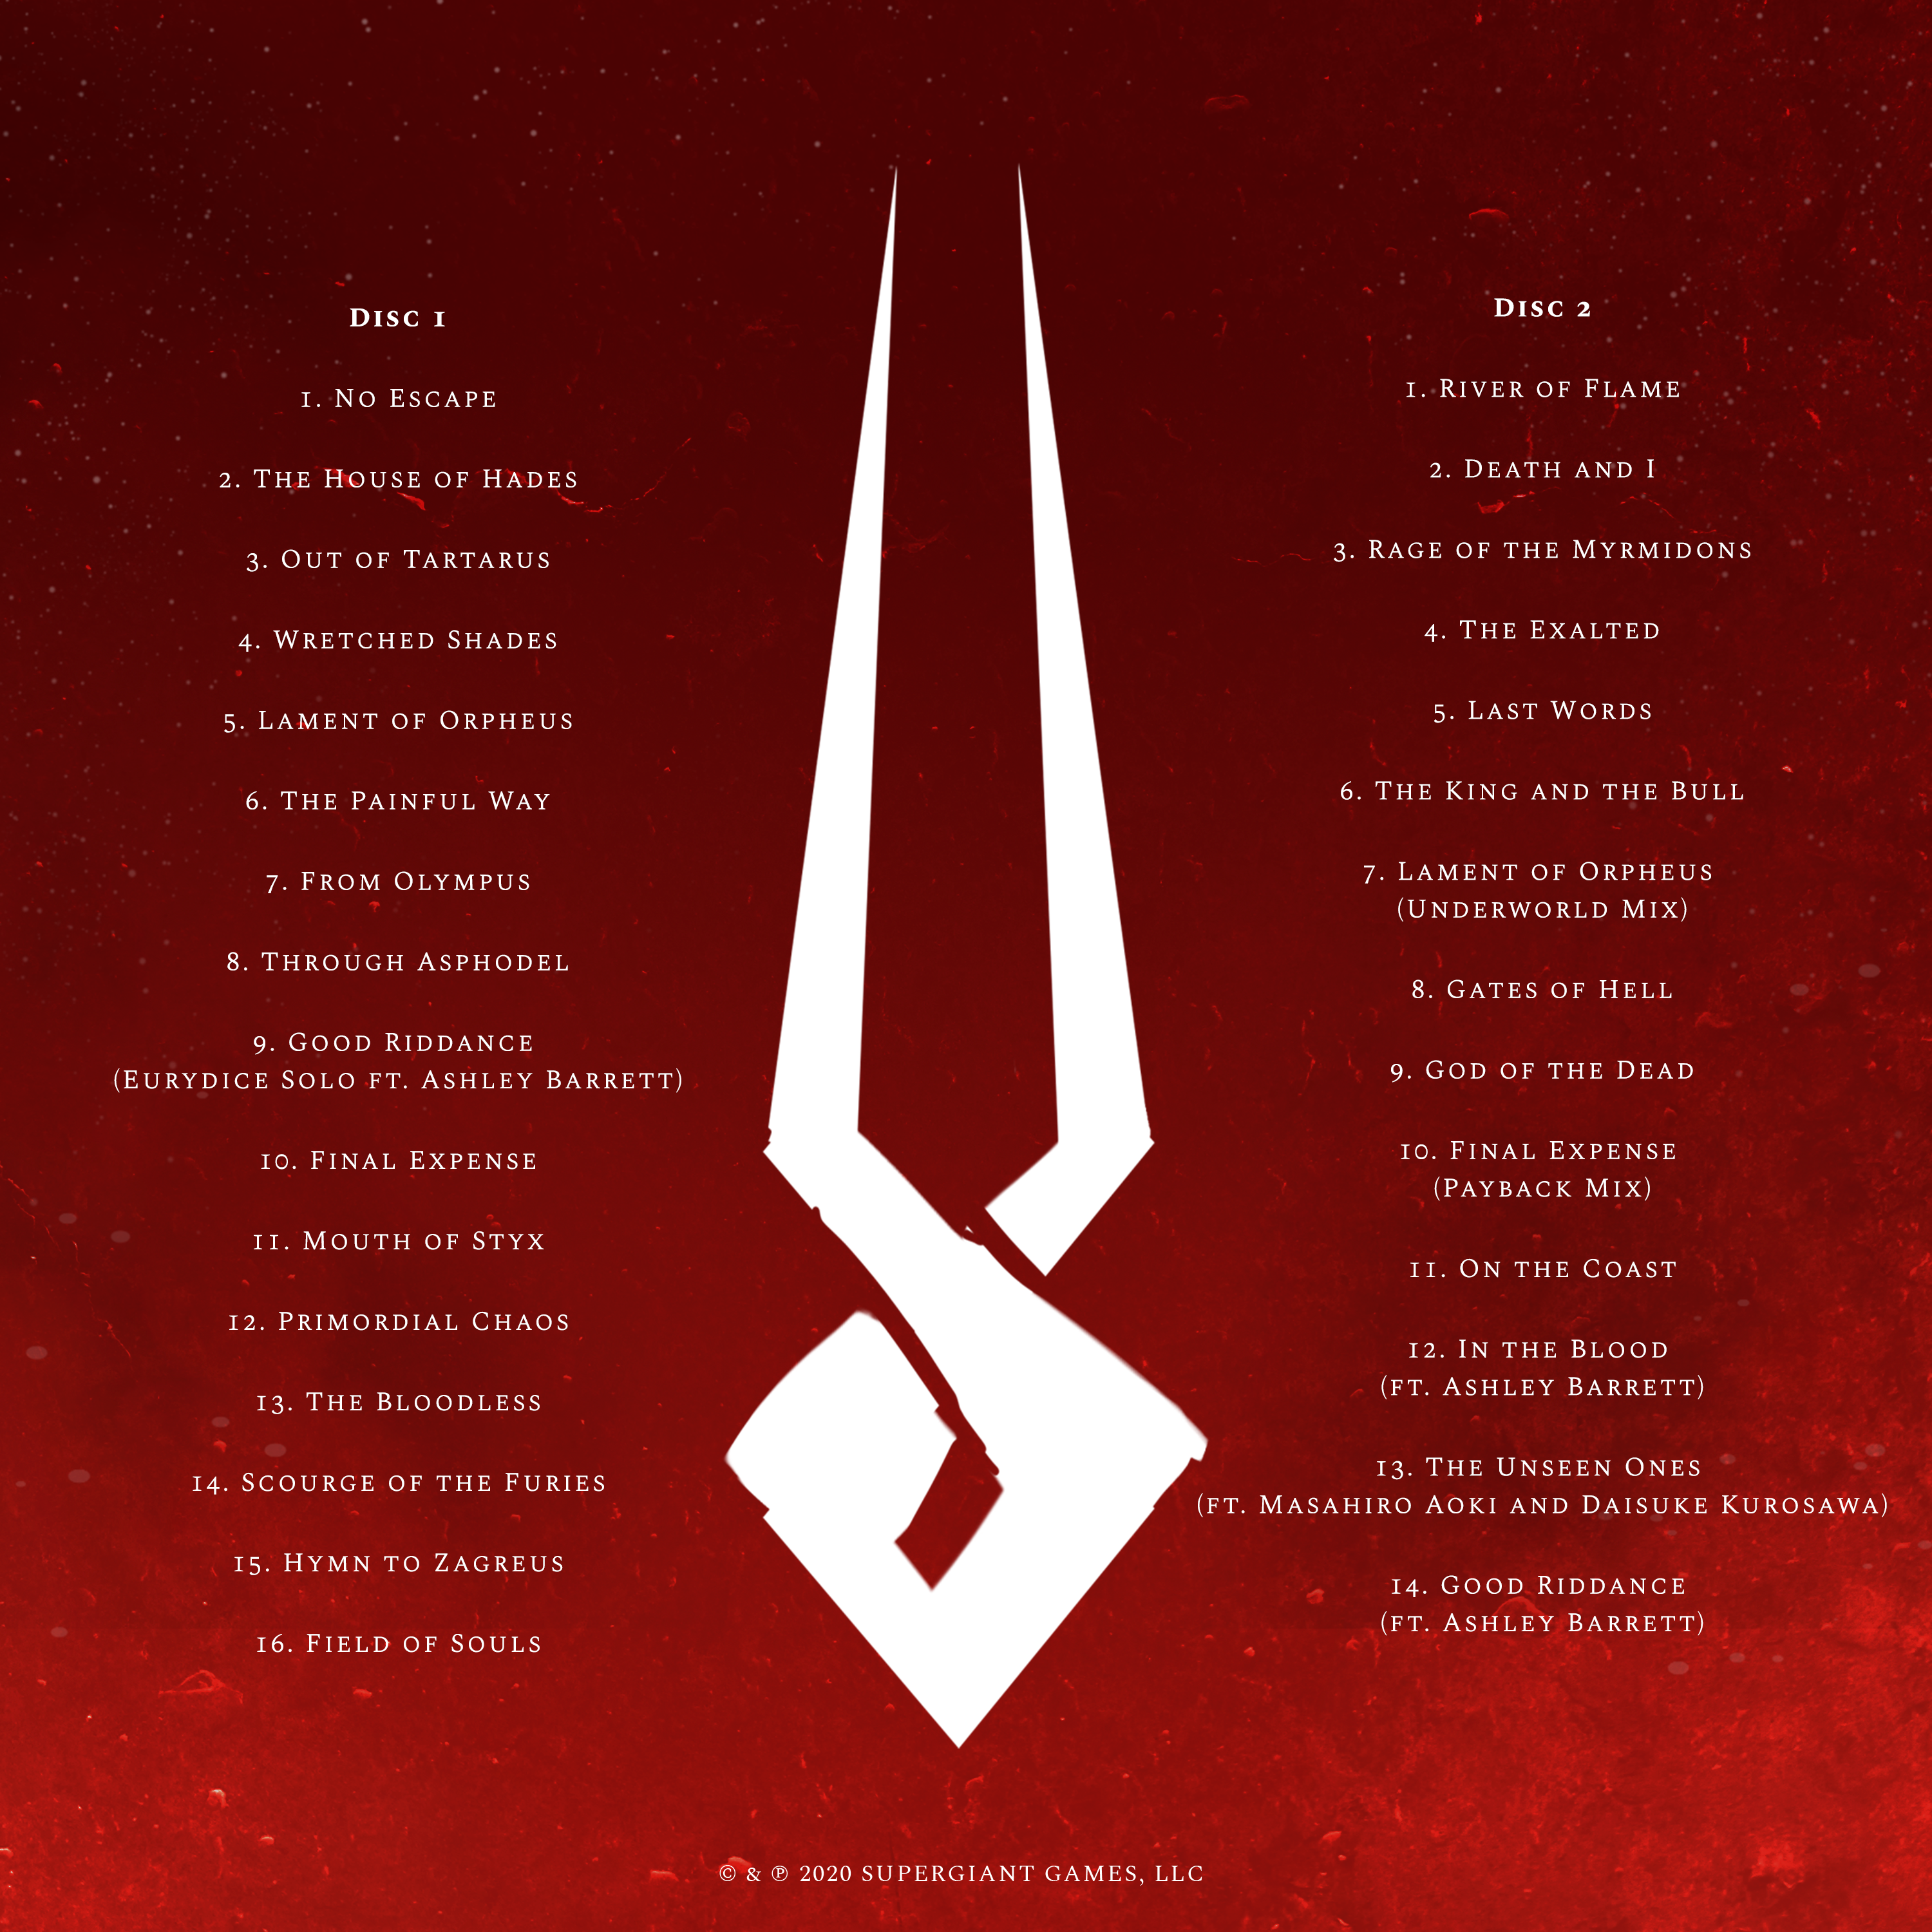 Hades: Original Soundtrack (2020) MP3 - Download Hades: Original